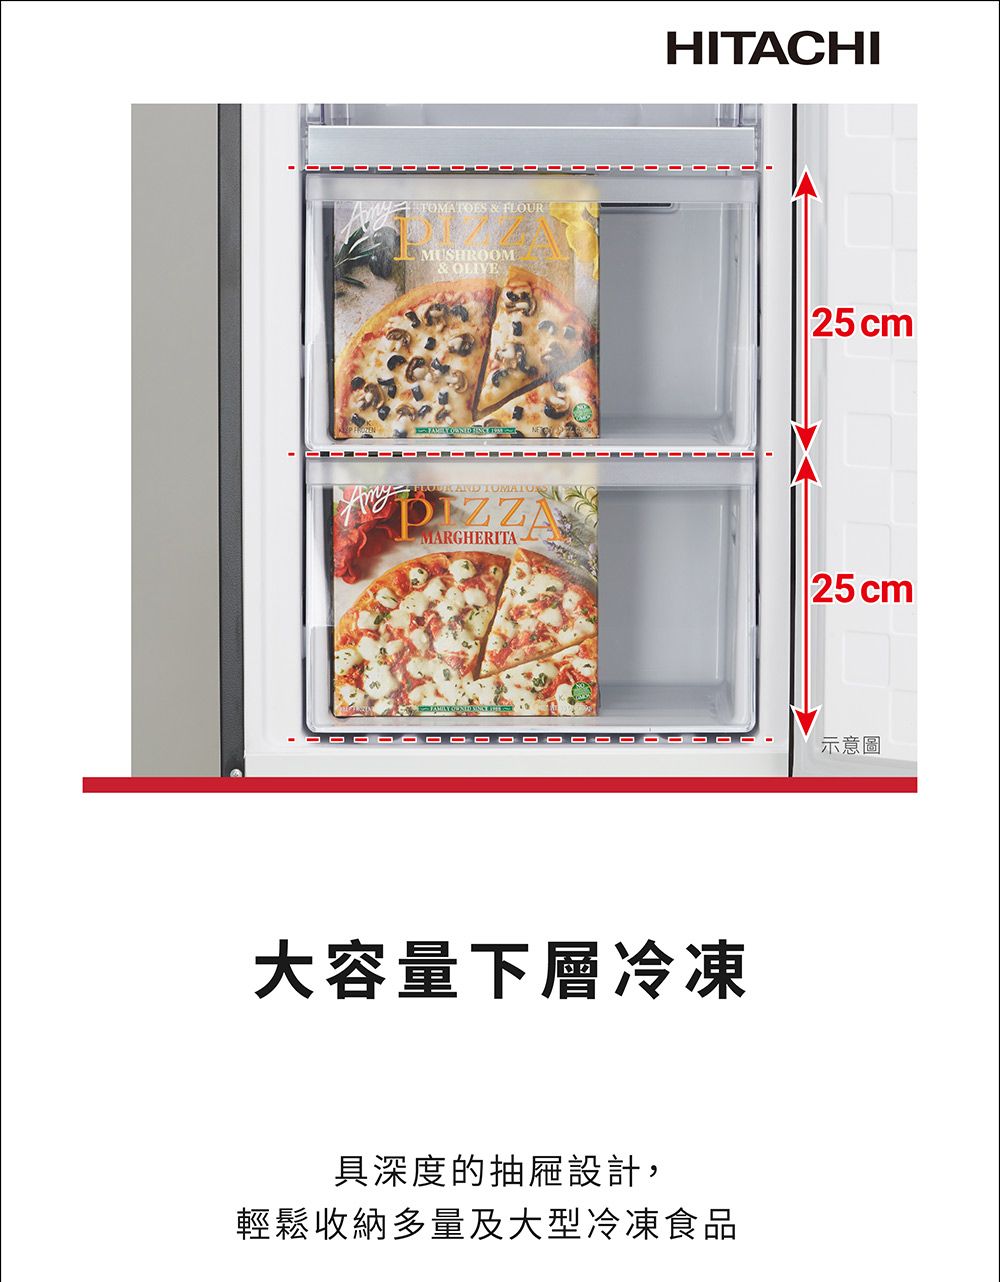 TOMATOES  FLOURMUSHROOM& OLIVE  MARGHERITAHITACHI大容量下層冷凍具深度的抽屜設計,輕鬆收納多量及大型冷凍食品 25cm25cm示意圖